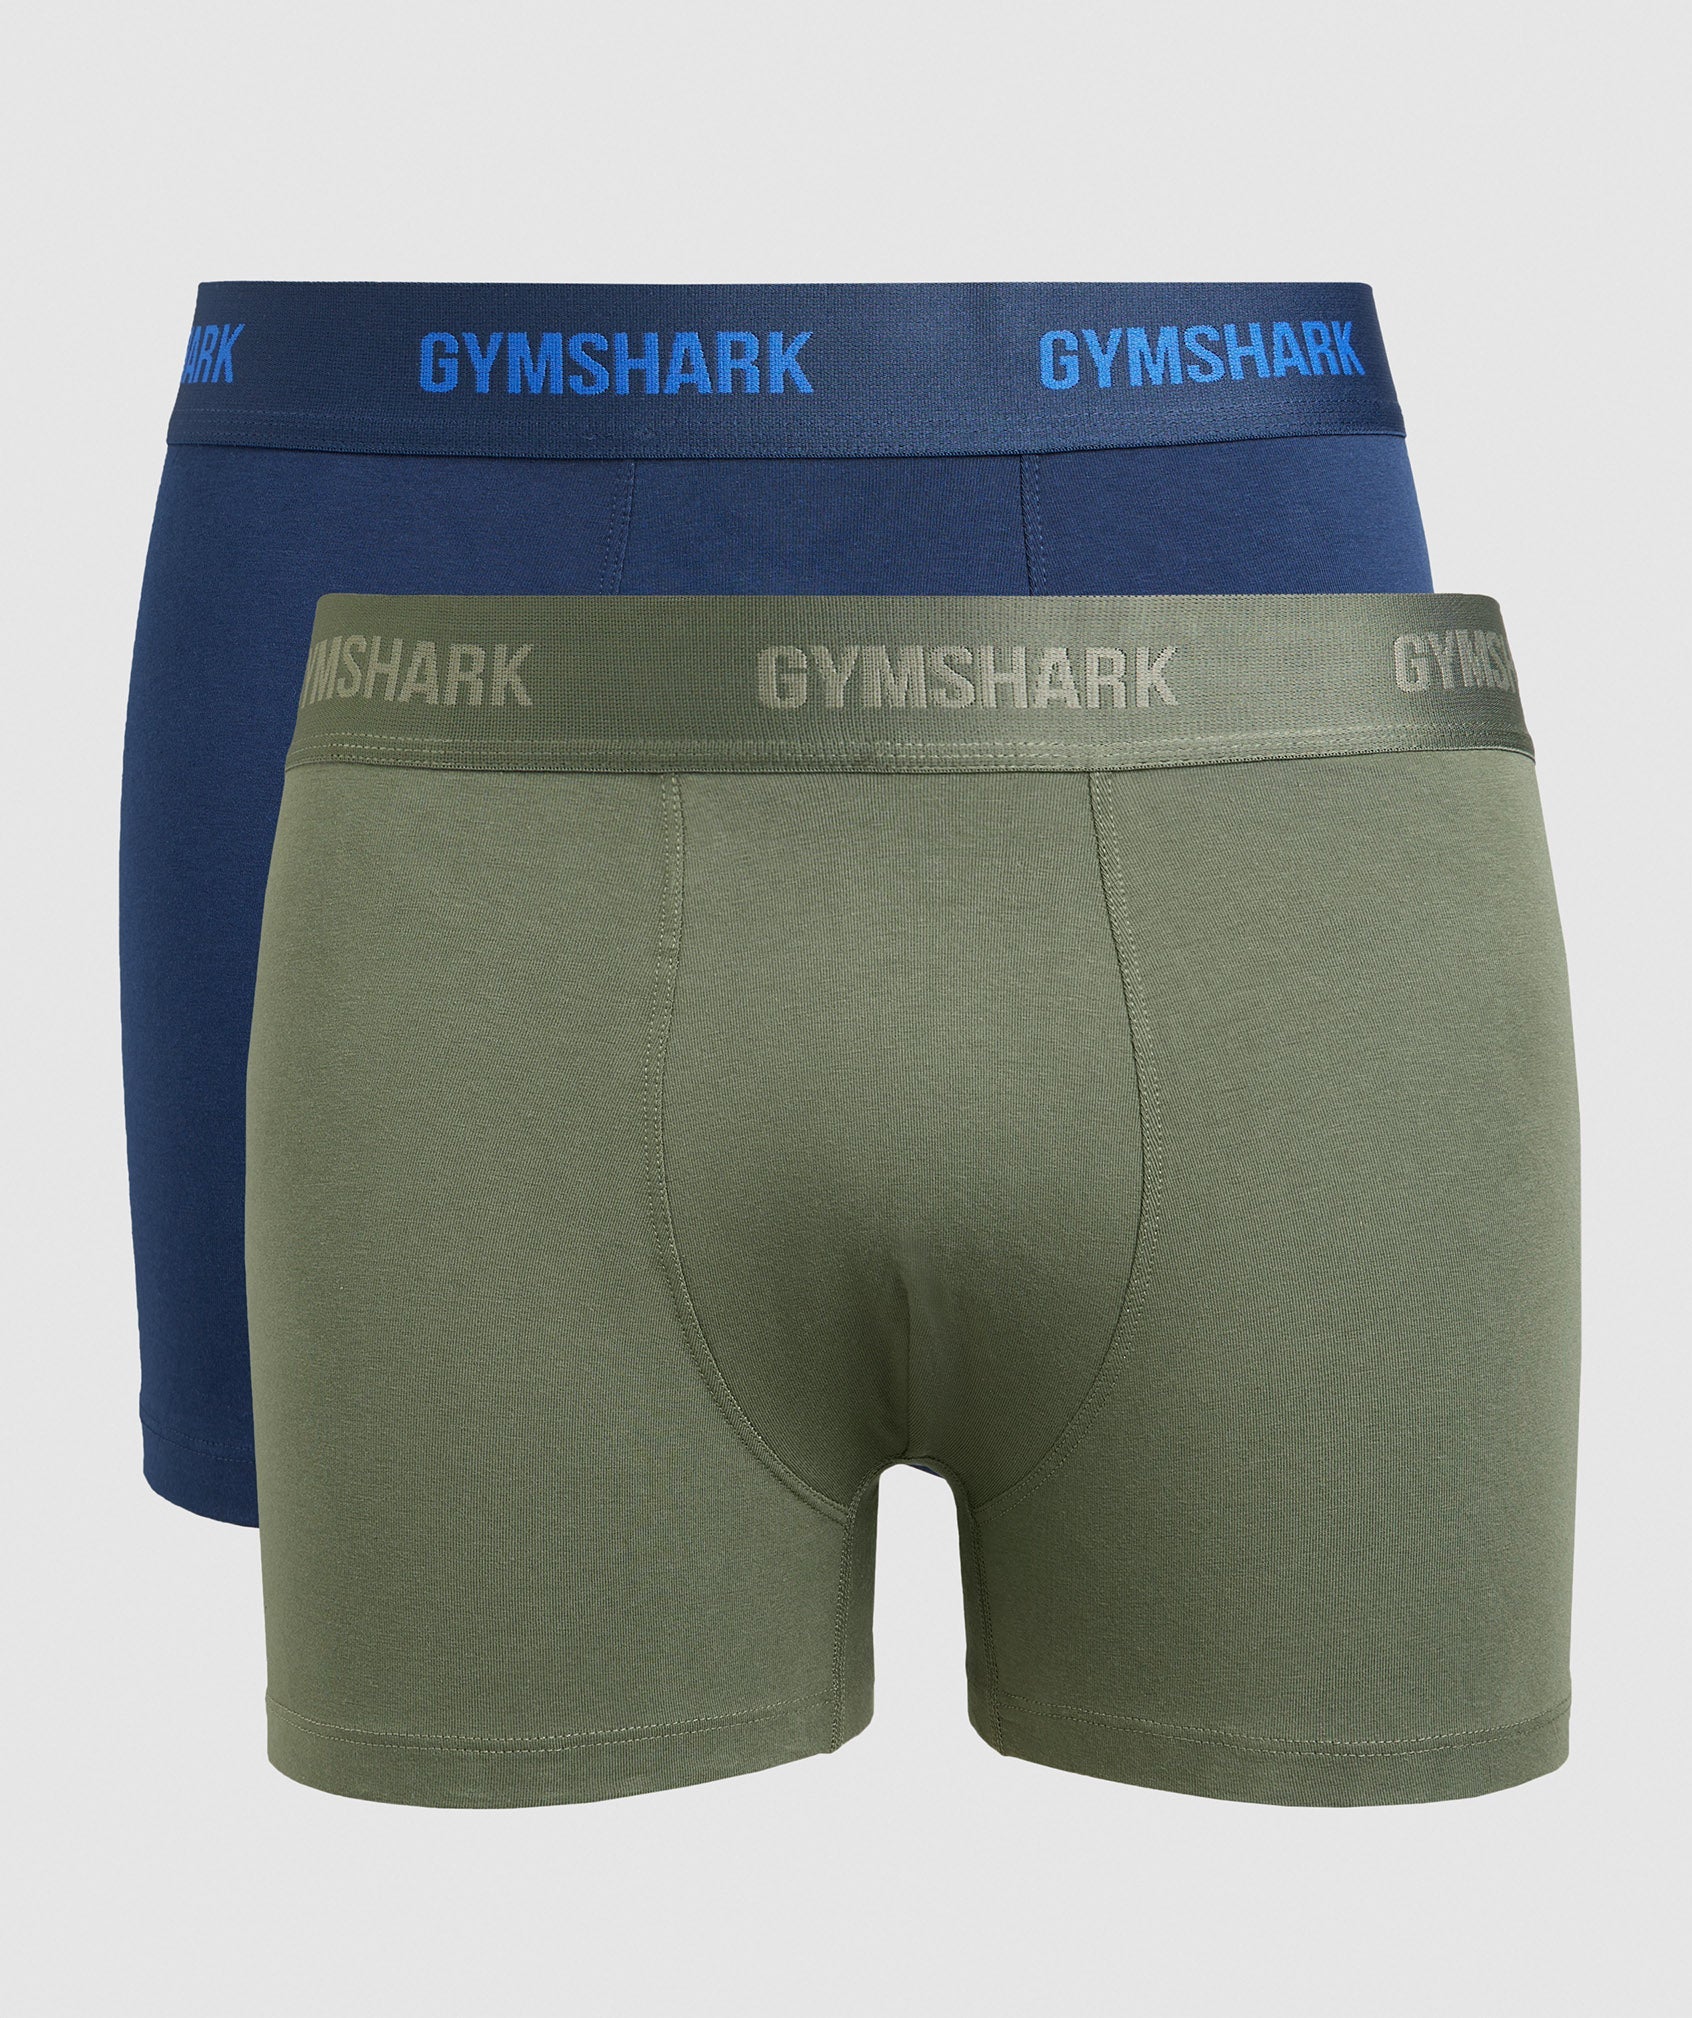 Gymshark Sports Tech Boxers 2pk - Black/Core Olive